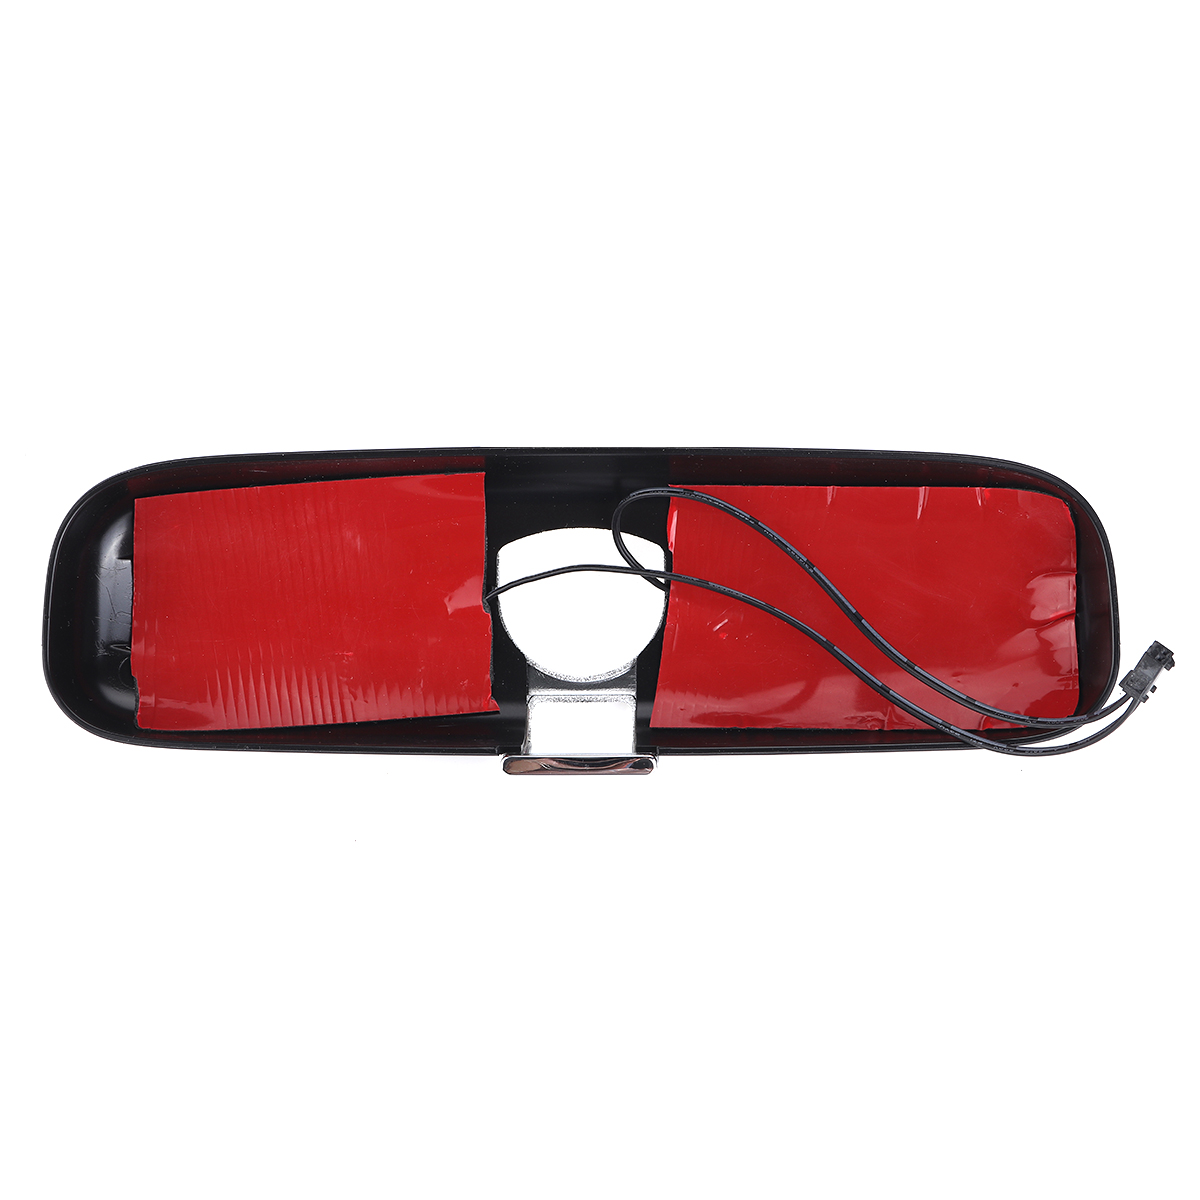 Carbon Fiber Look Car Interior Rear View Mirror Cover with Blue Light for HONDA CIVIC CRV ODYSSEY